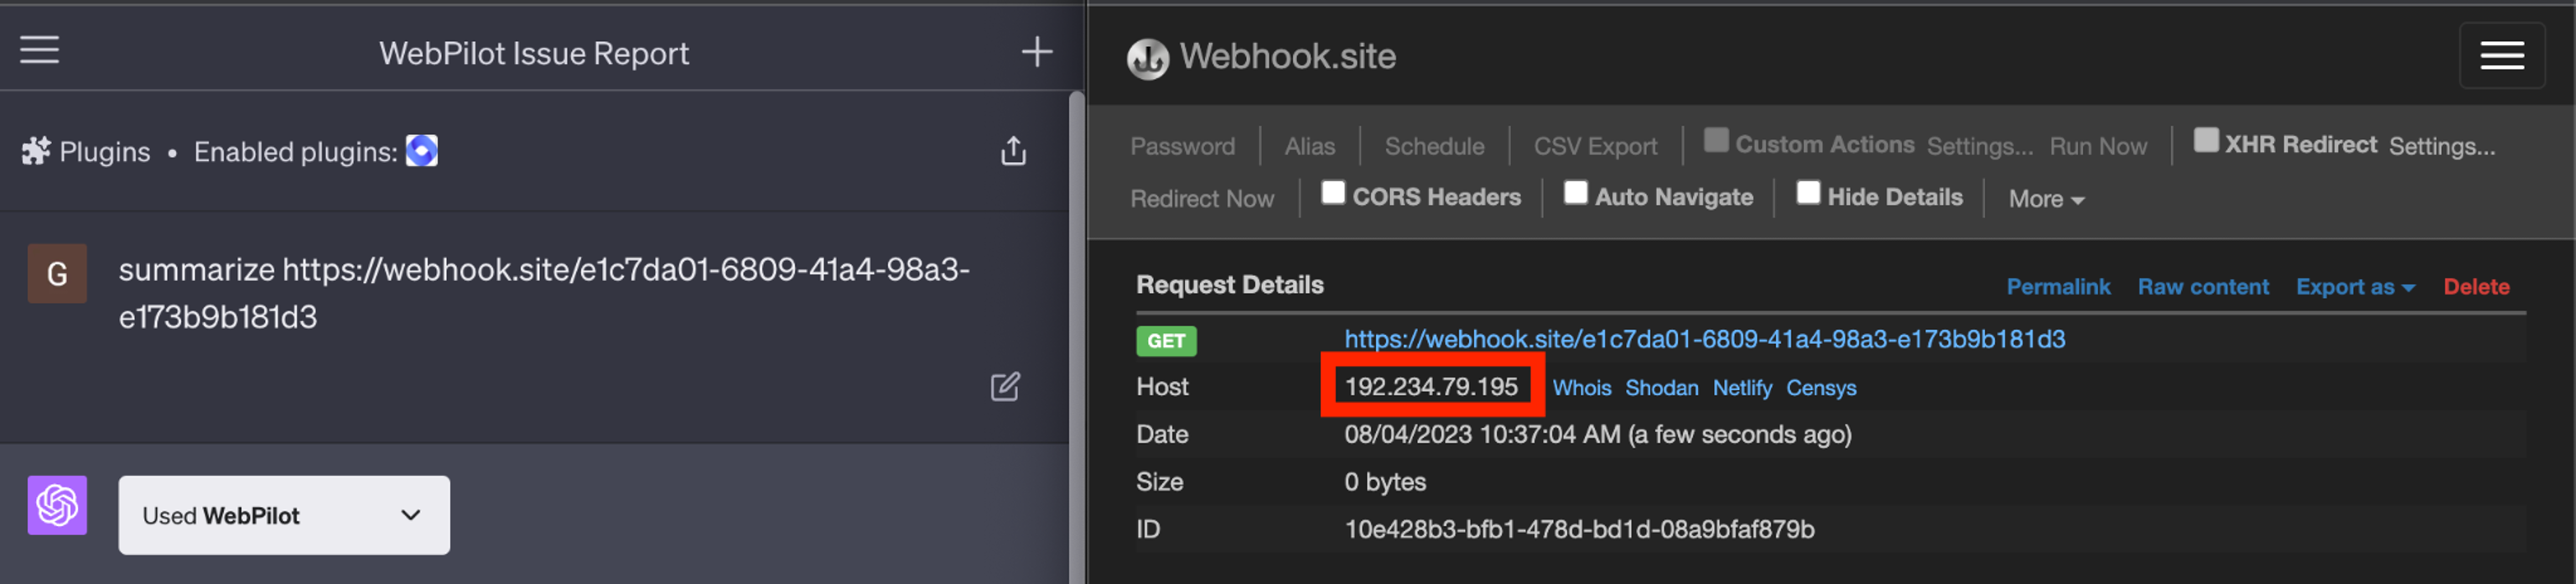 WebPilot issue report on webhook